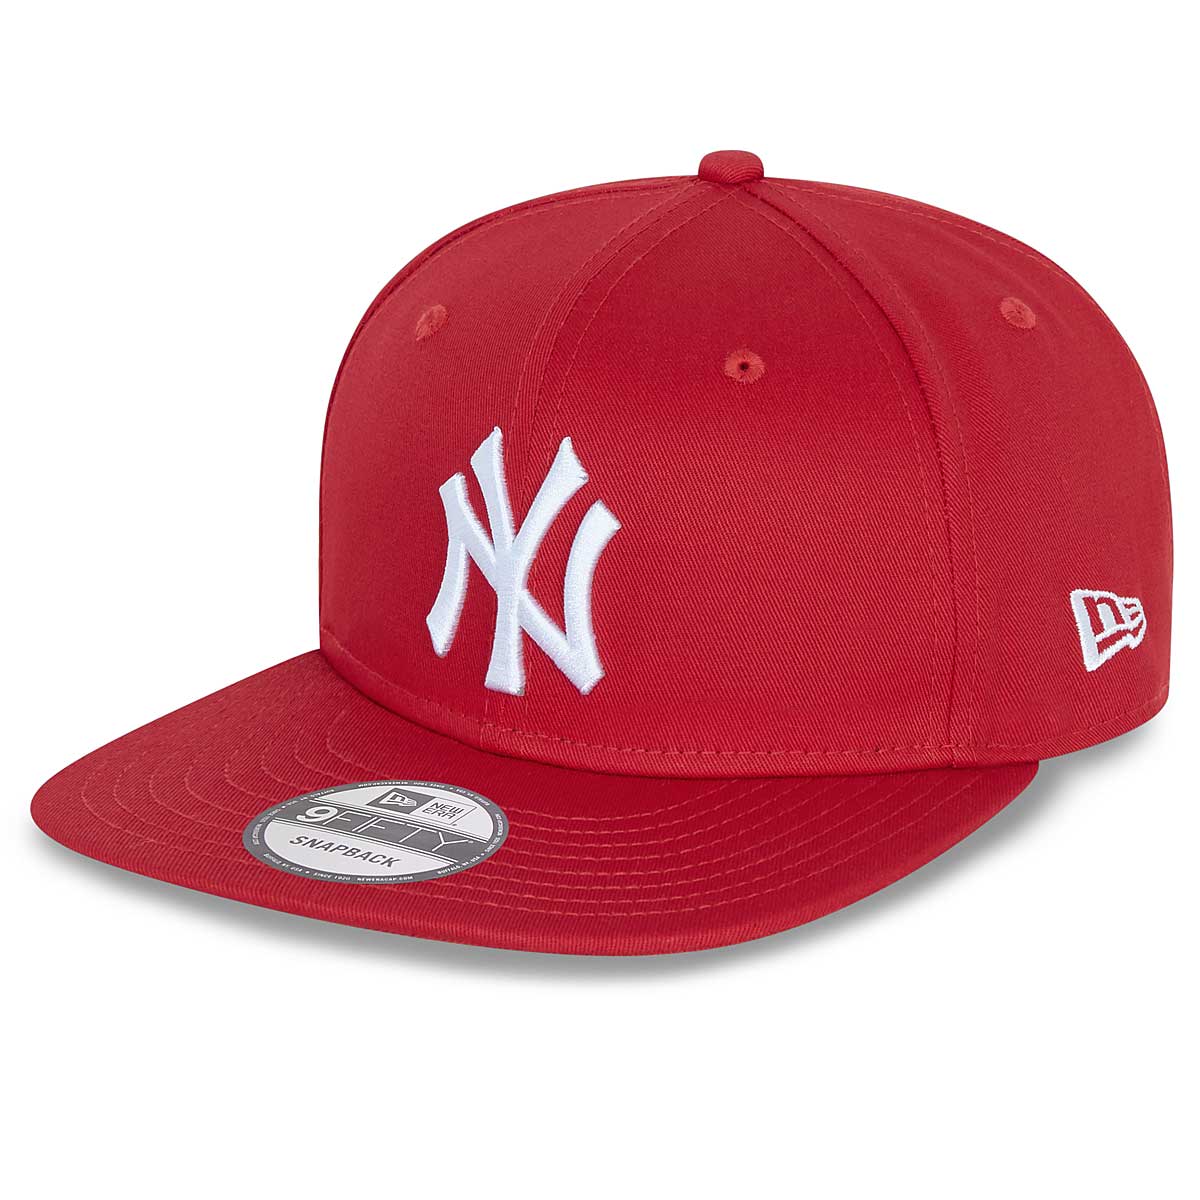 New Era Mlb 950 New York Yankees Colour, Red